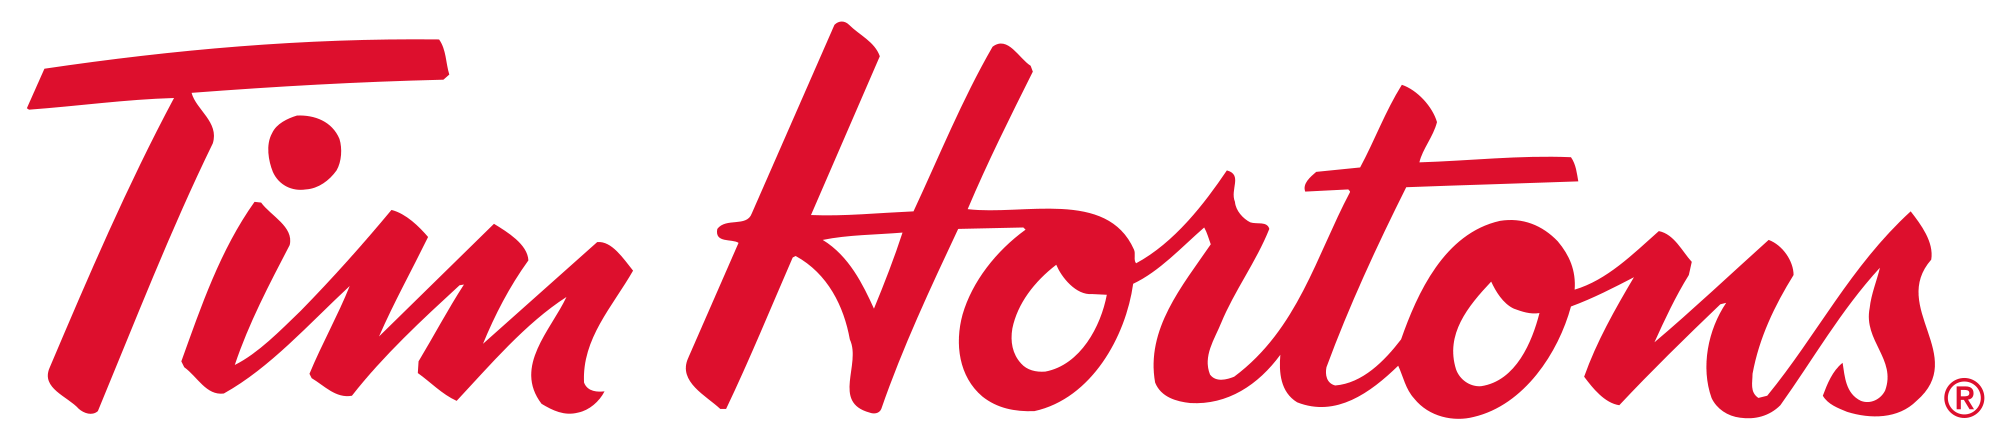 Tim Hortons Logo - Tim Hortons logo.svg